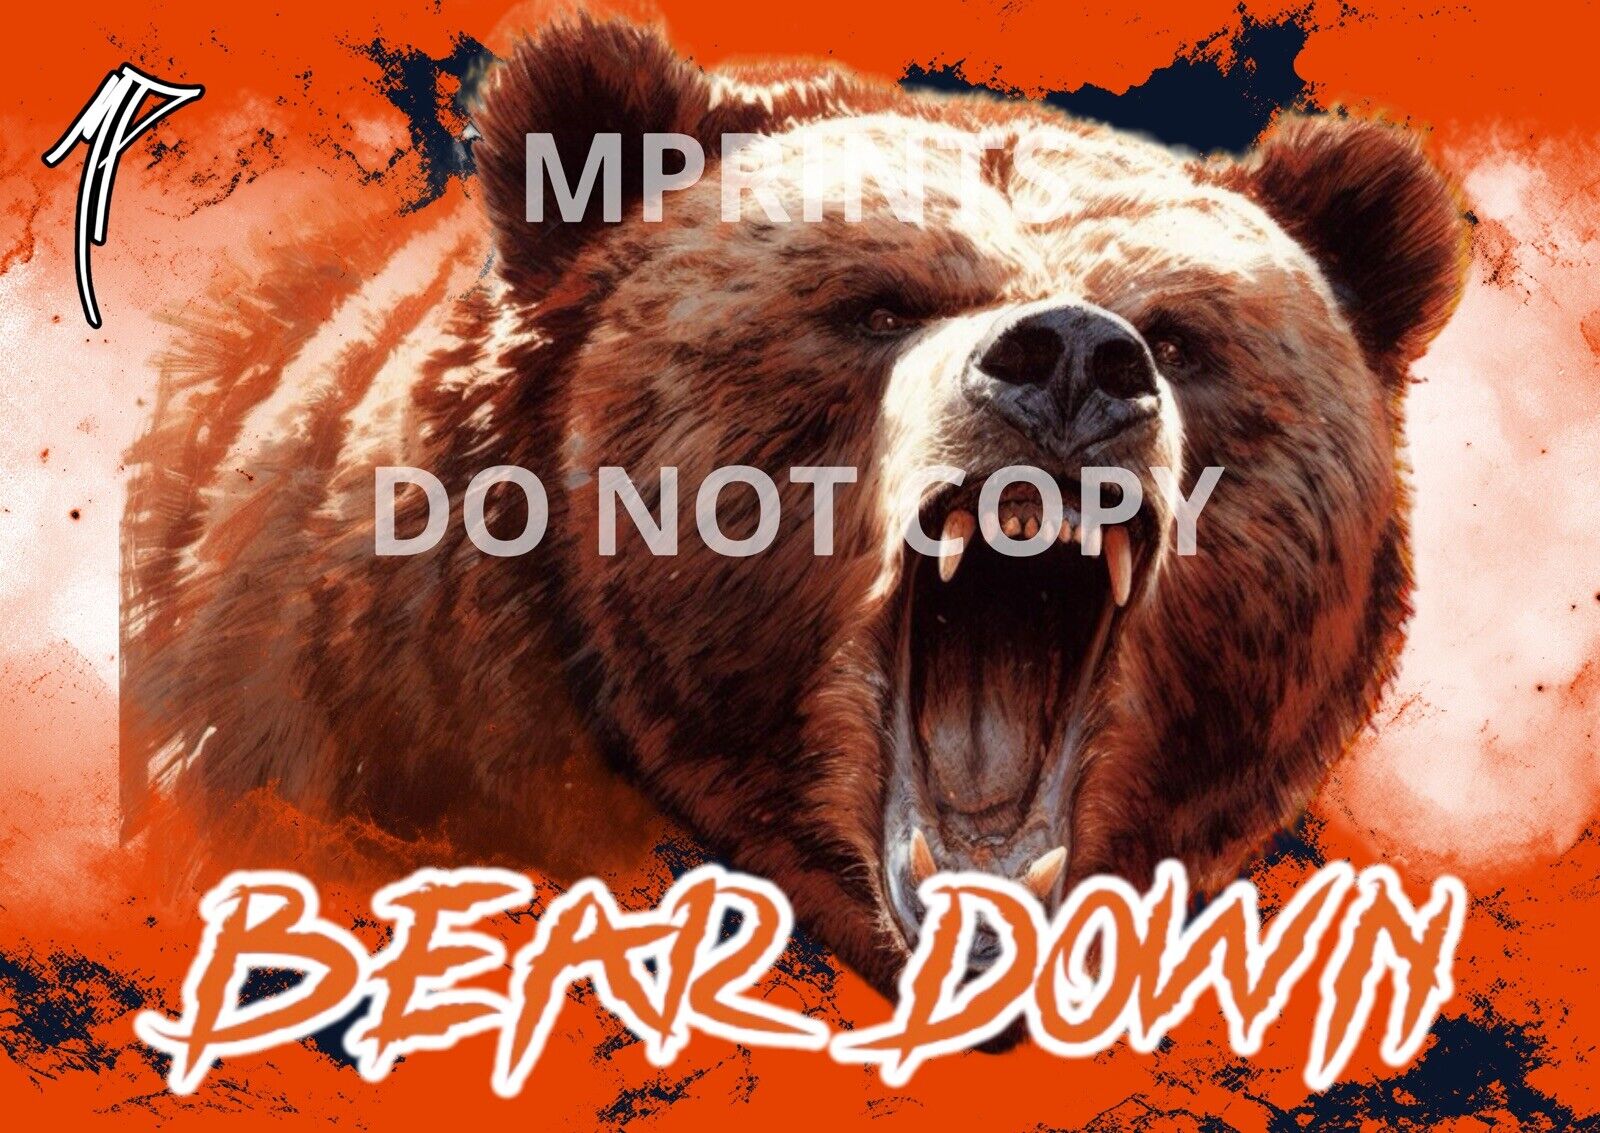 Bear Down Custom Trading Card (Chicago Bears) By MPRINTS